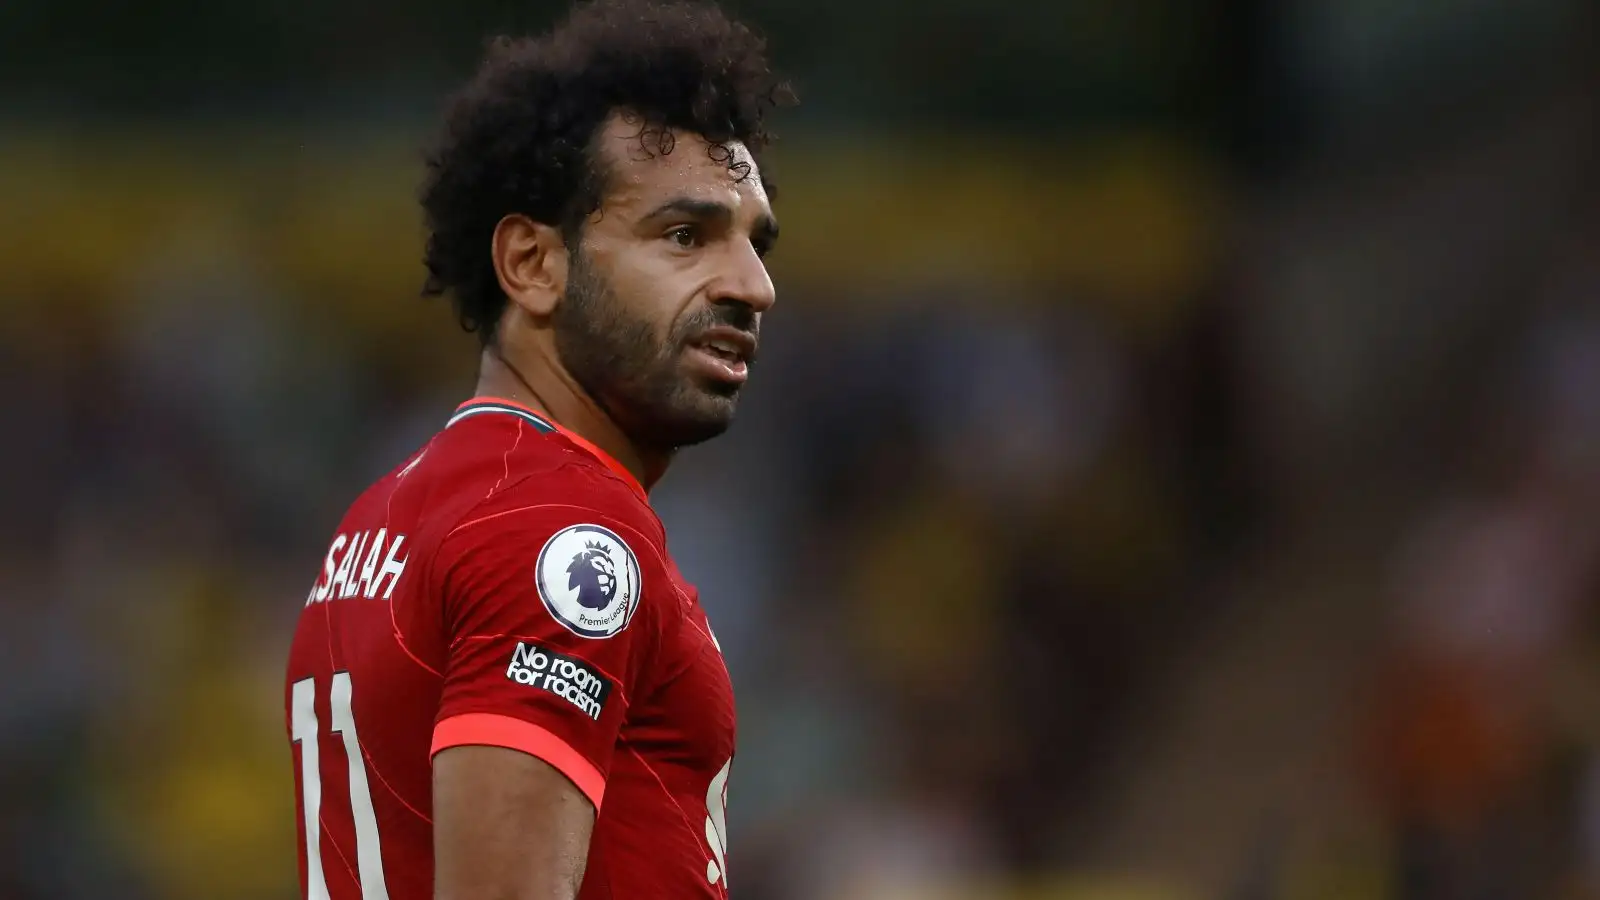 Liverpool striker Mo Salah watches play